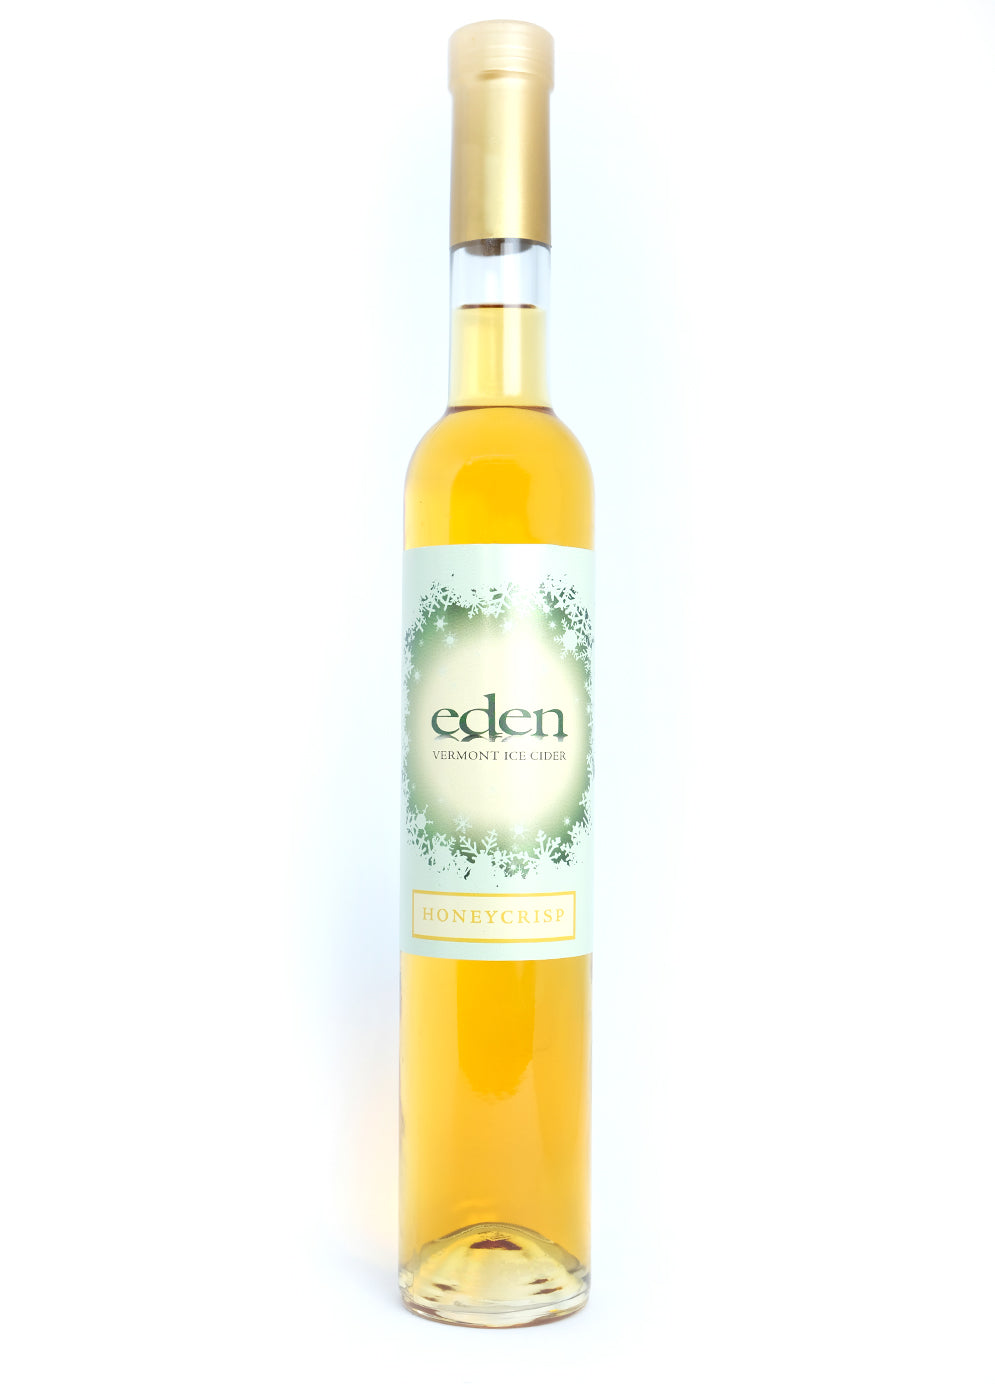 Eden 2015 Ice Cider Honeycrisp (375ml)